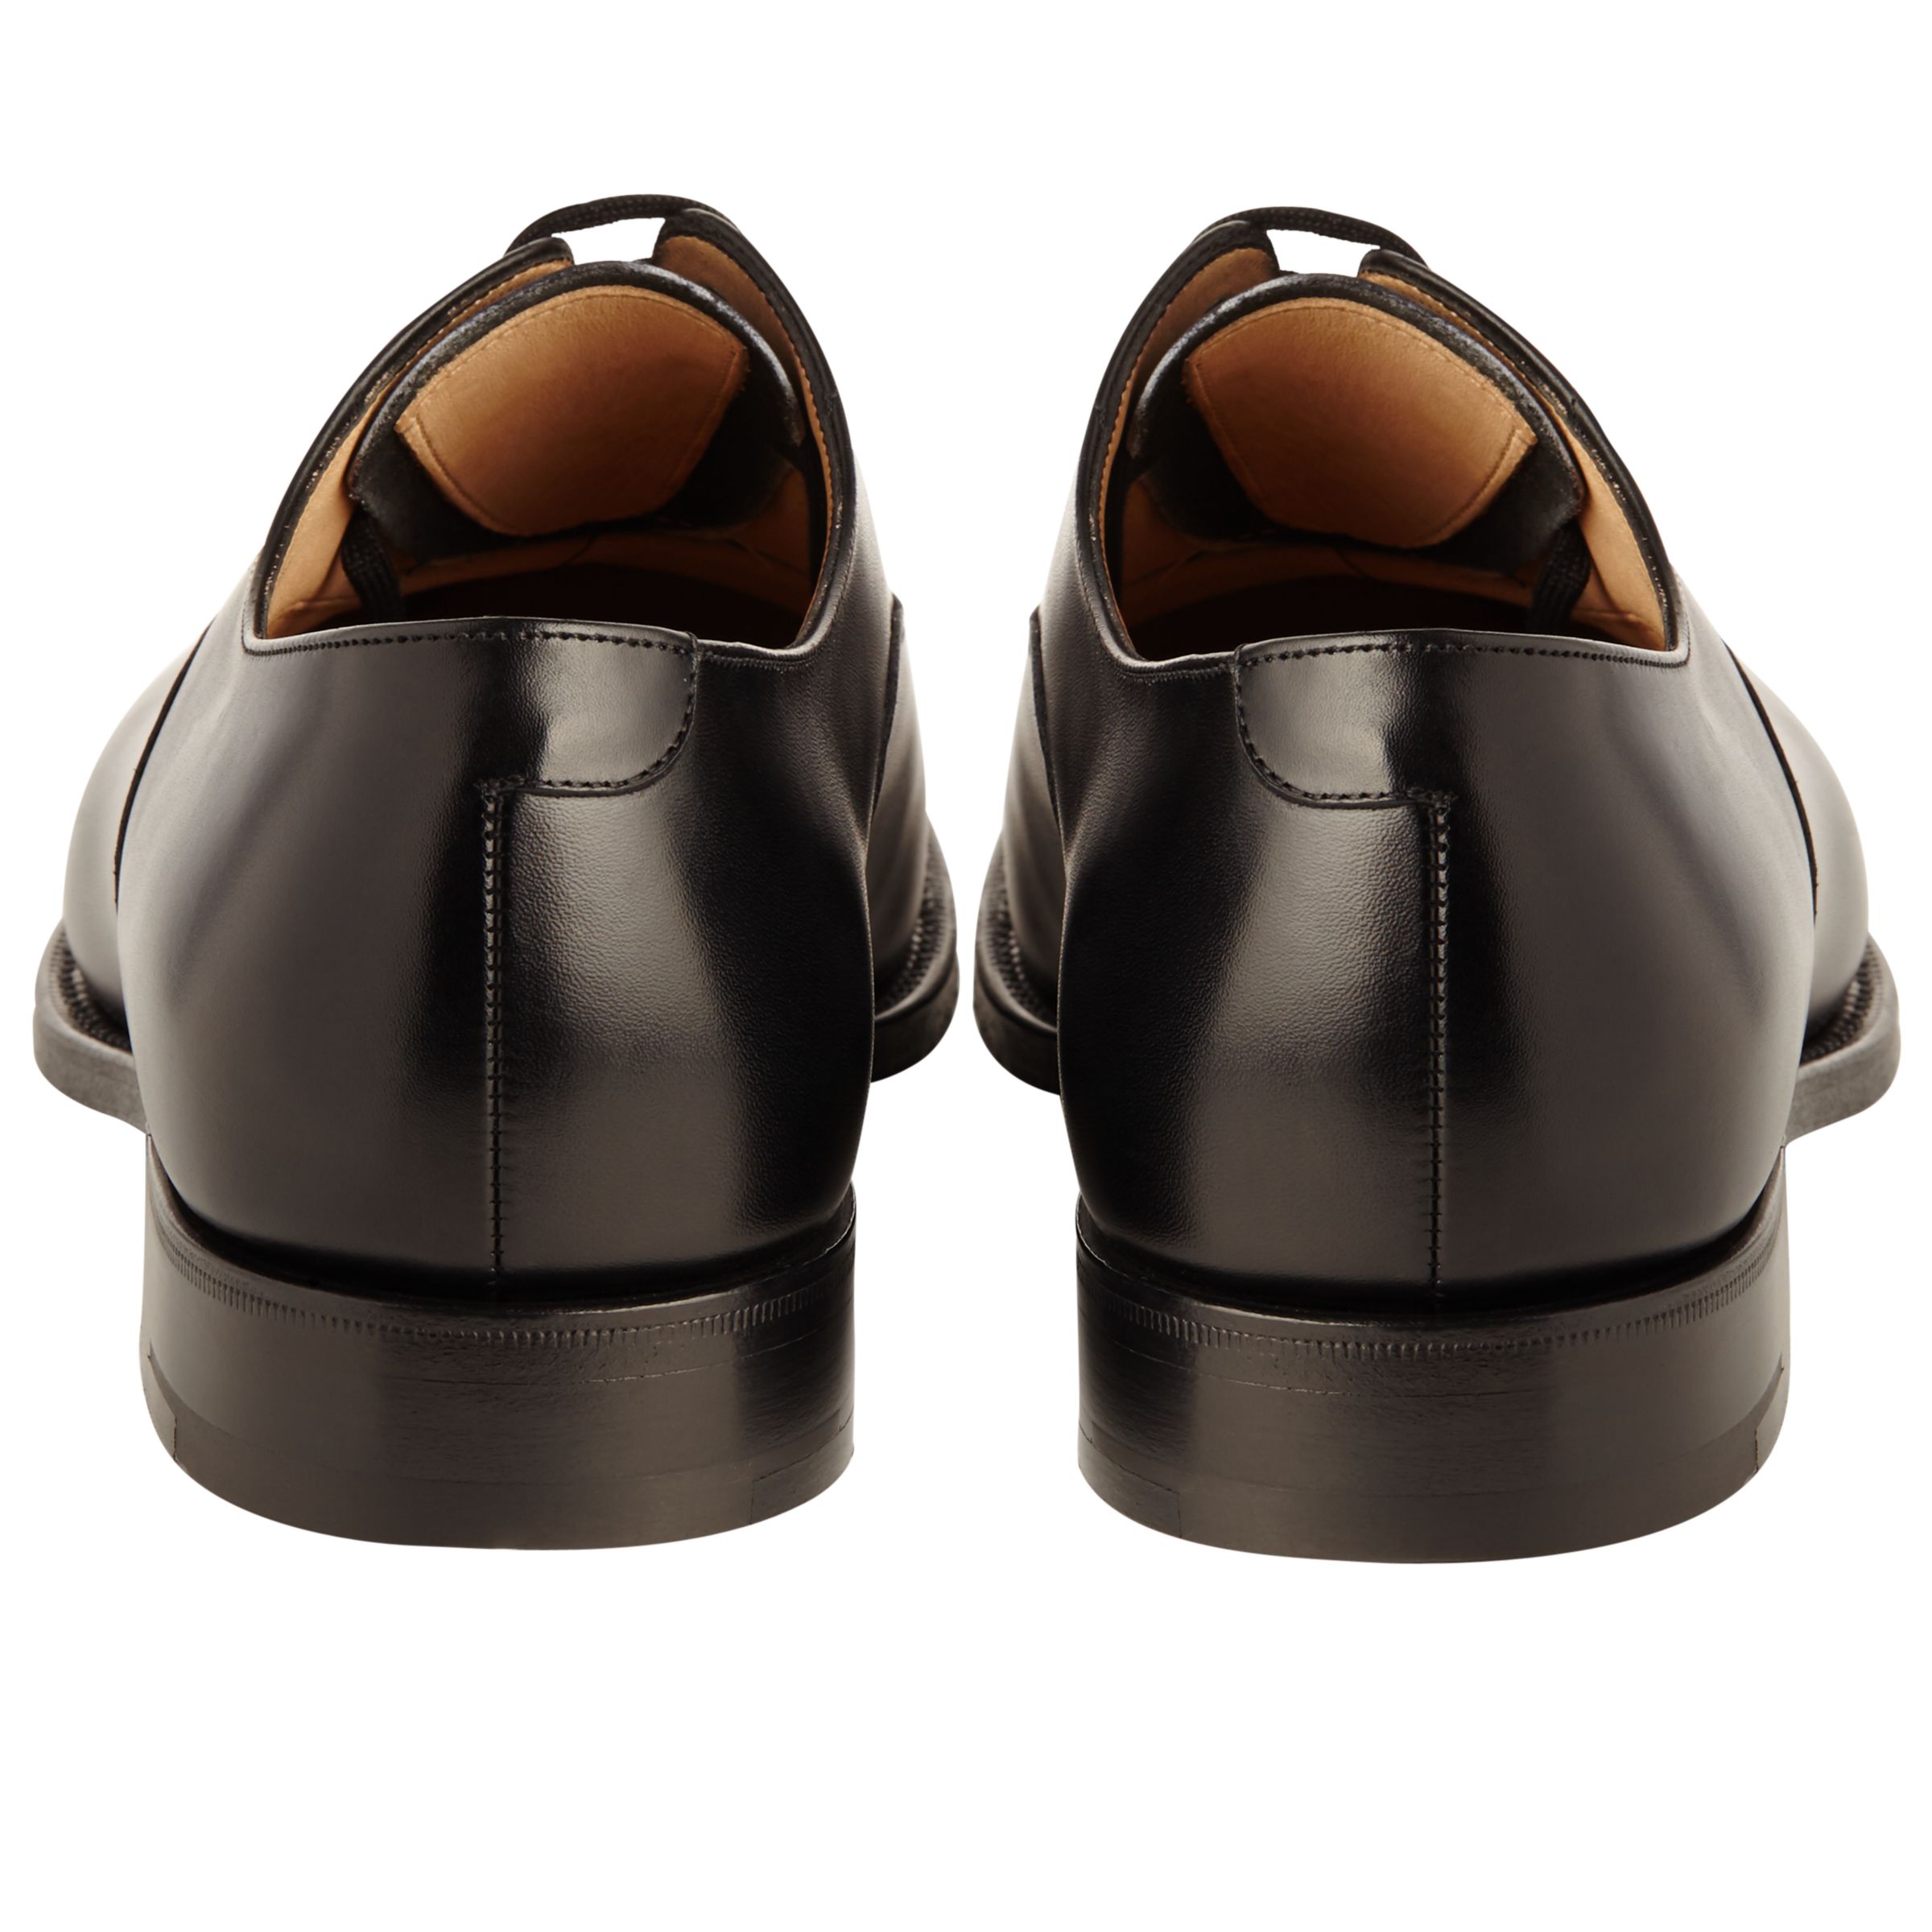 Church's Dubai Leather Oxford Shoes, Black at John Lewis & Partners